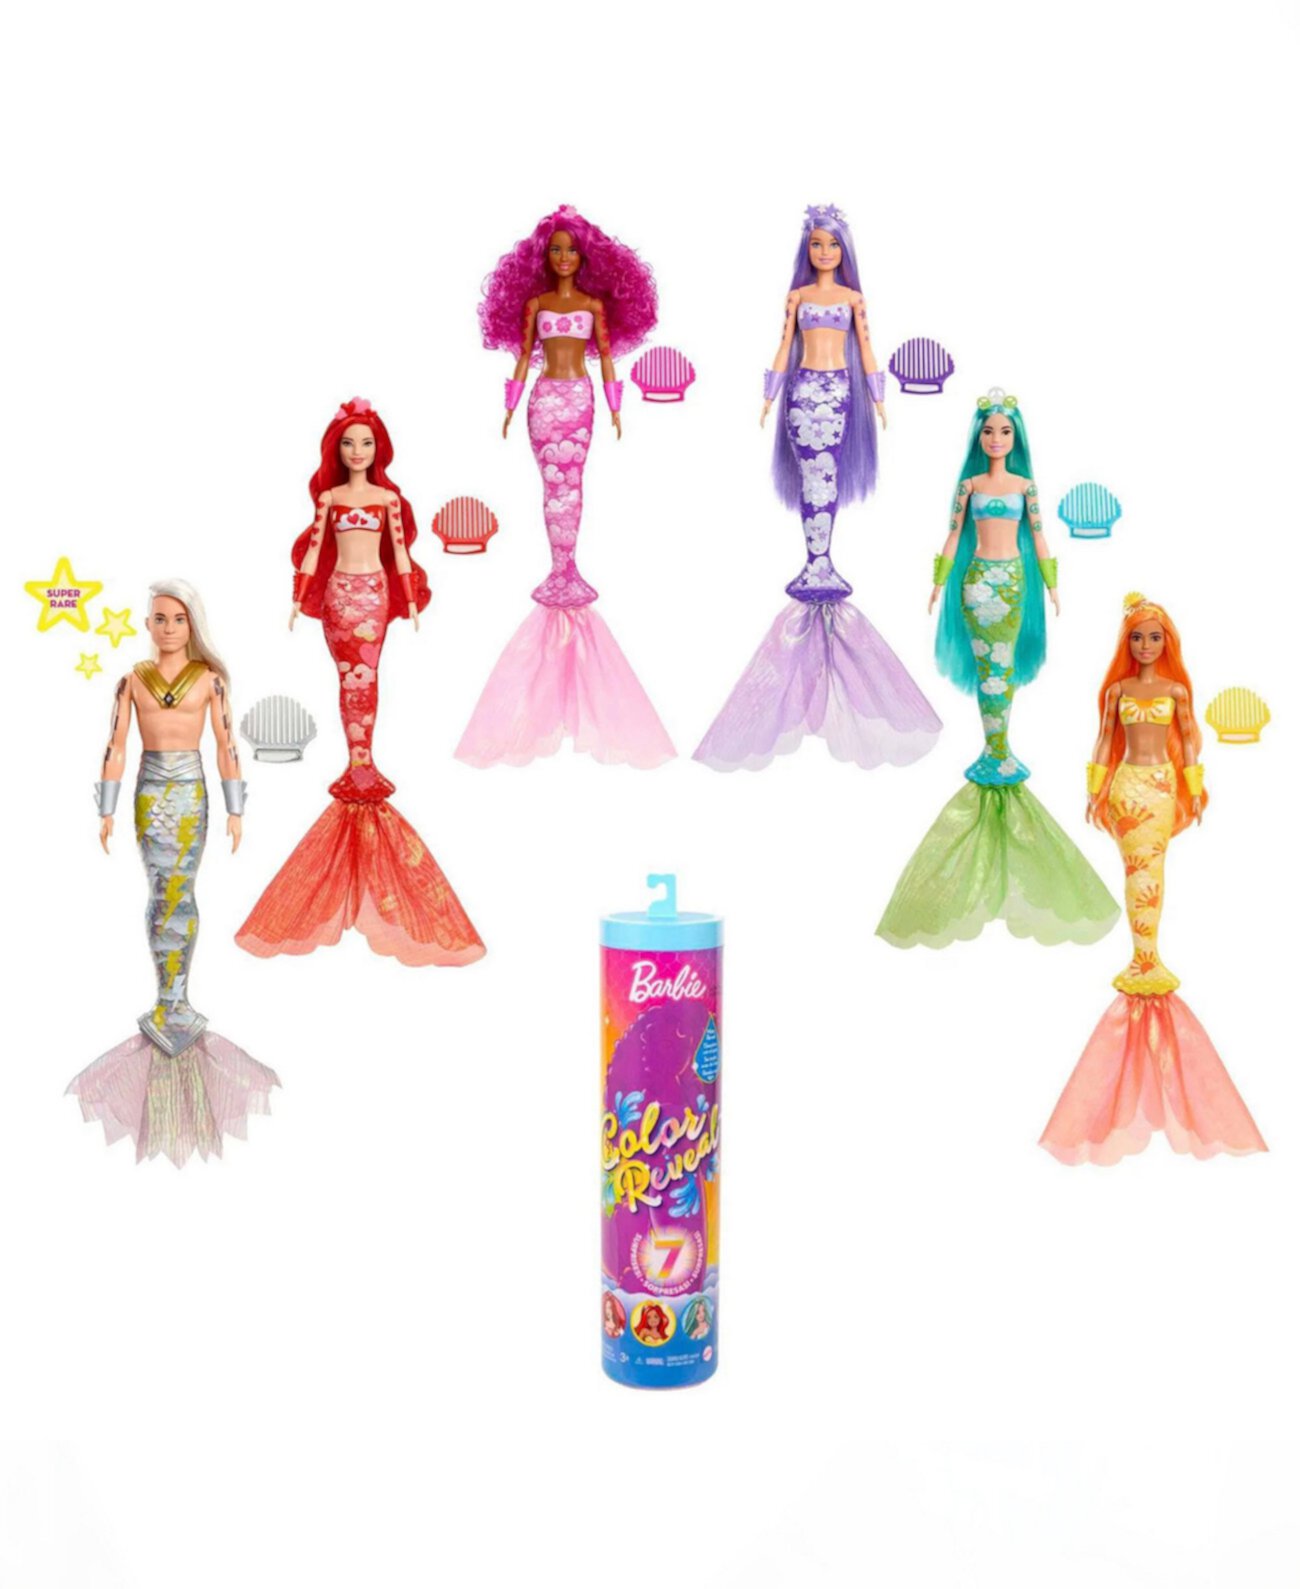 Раскрась куклу-русалку с 7 куклами цвета радуги Barbie